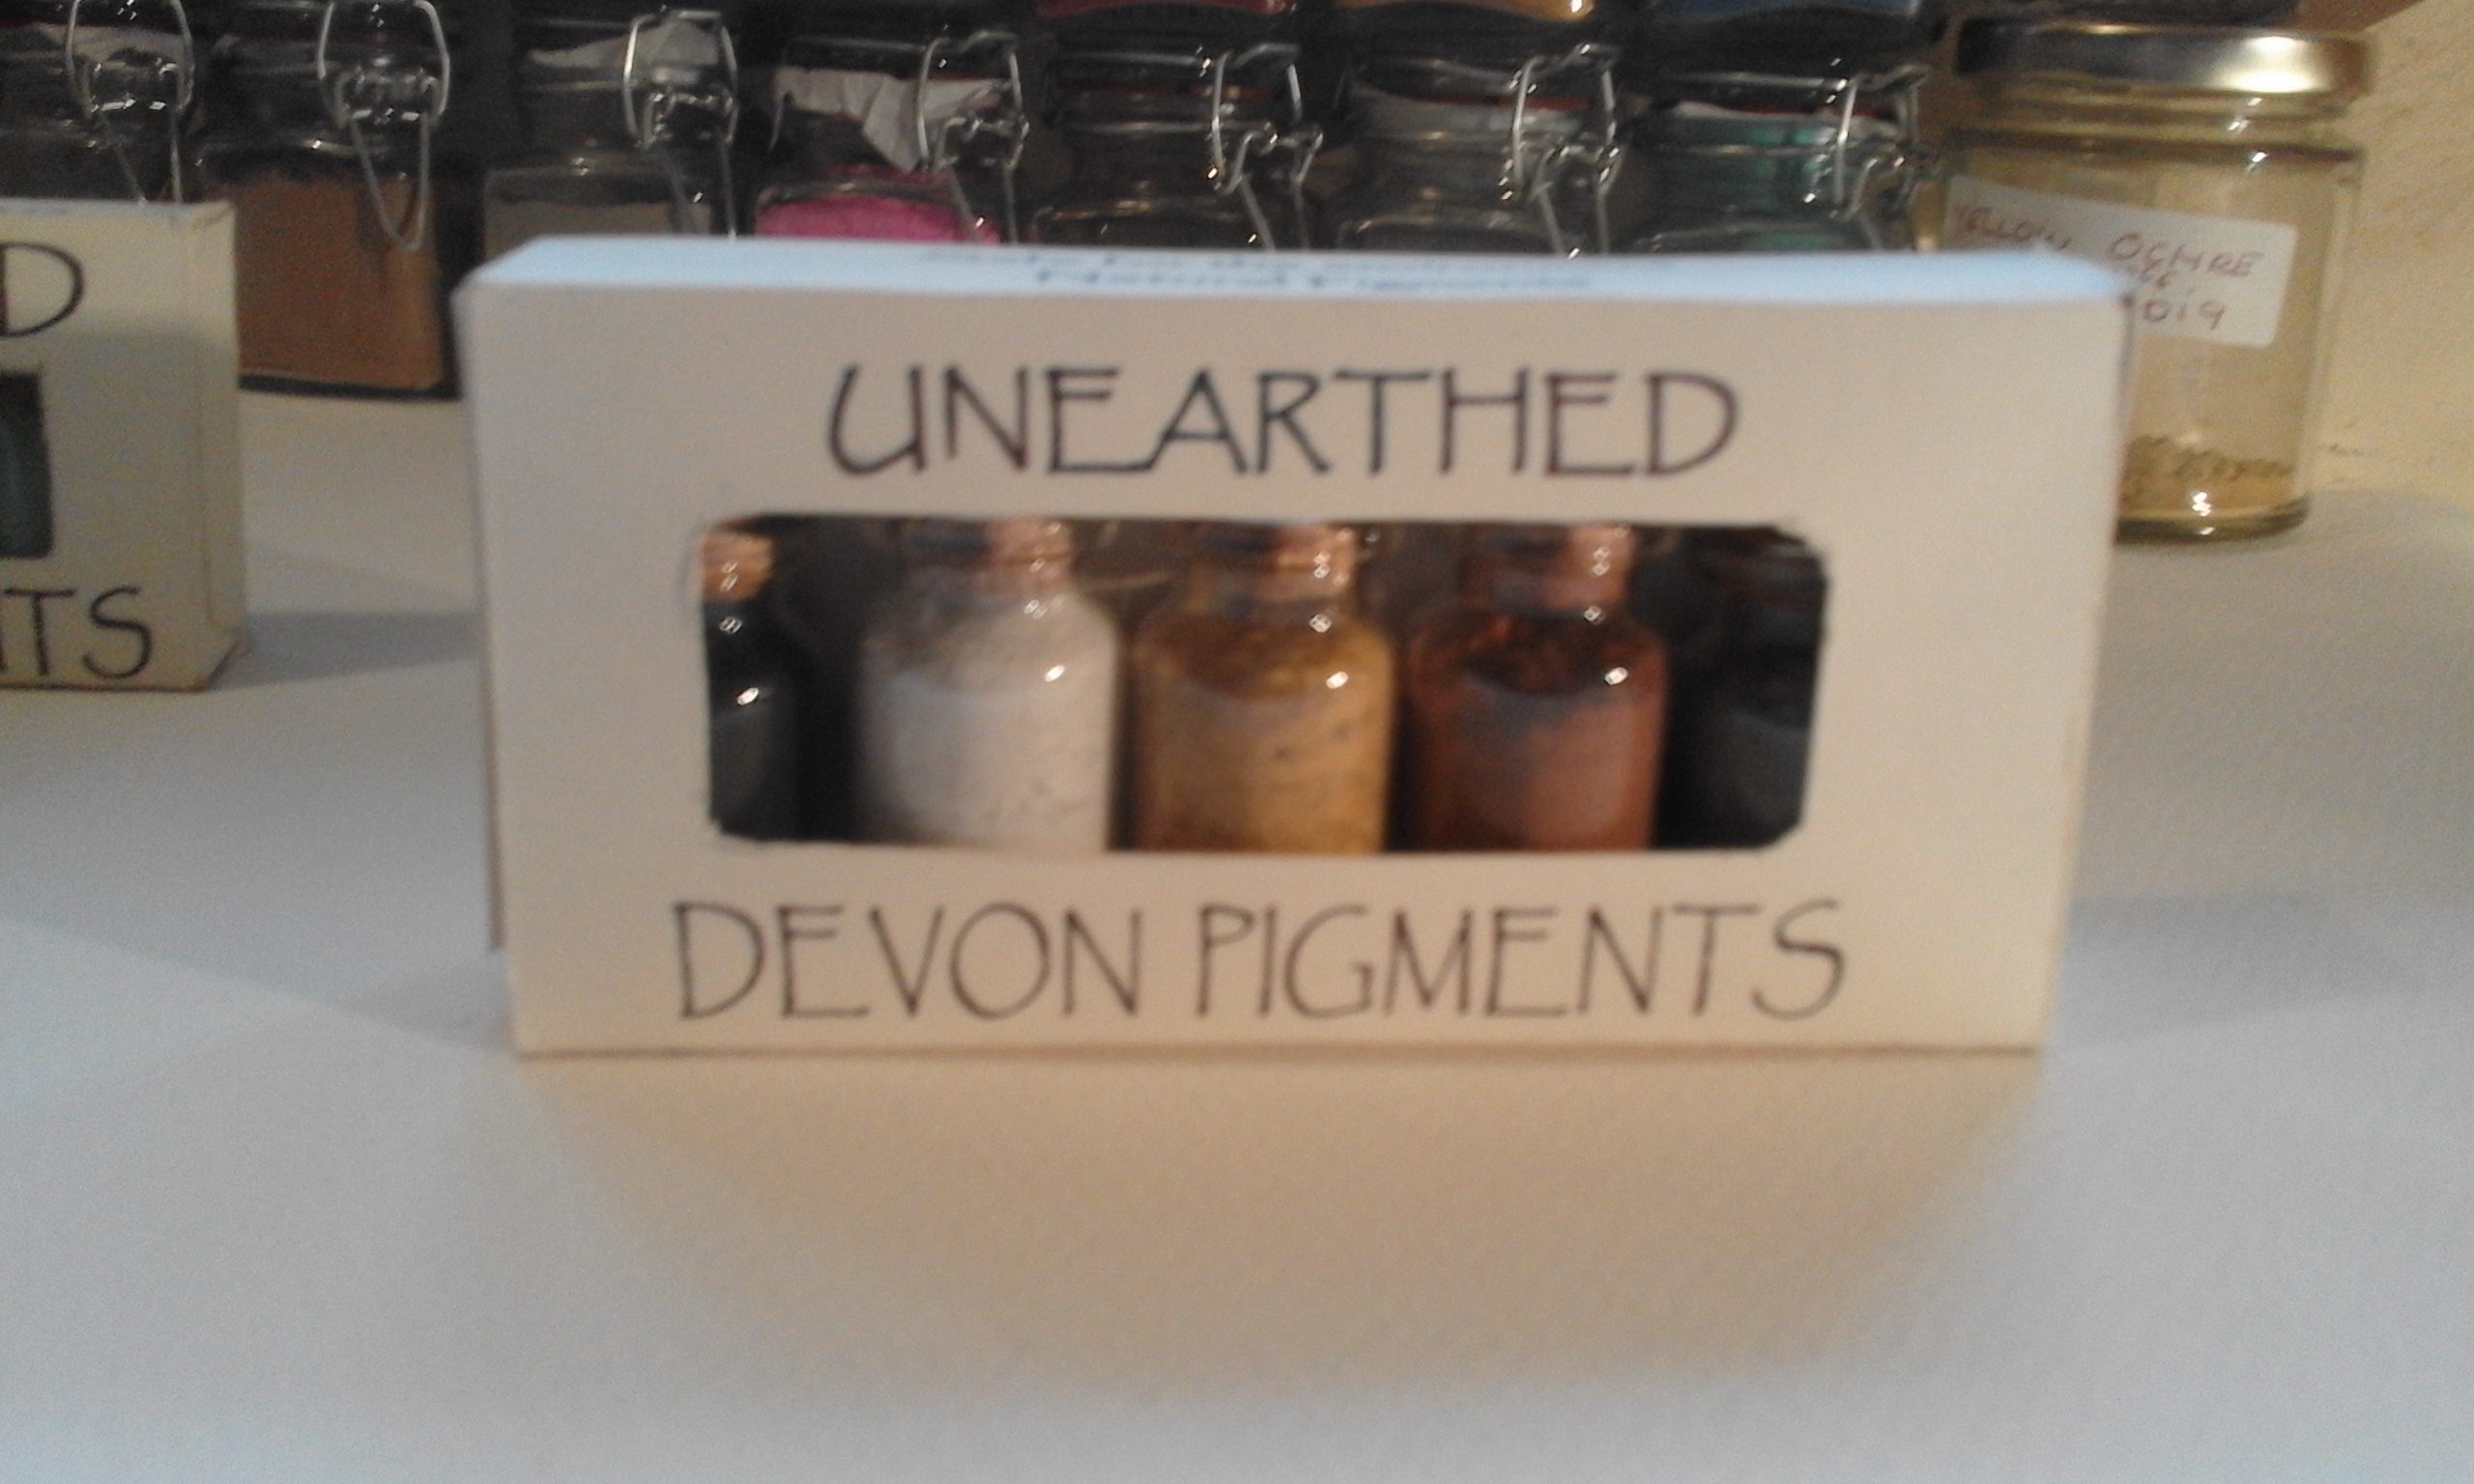 Devon Pigments